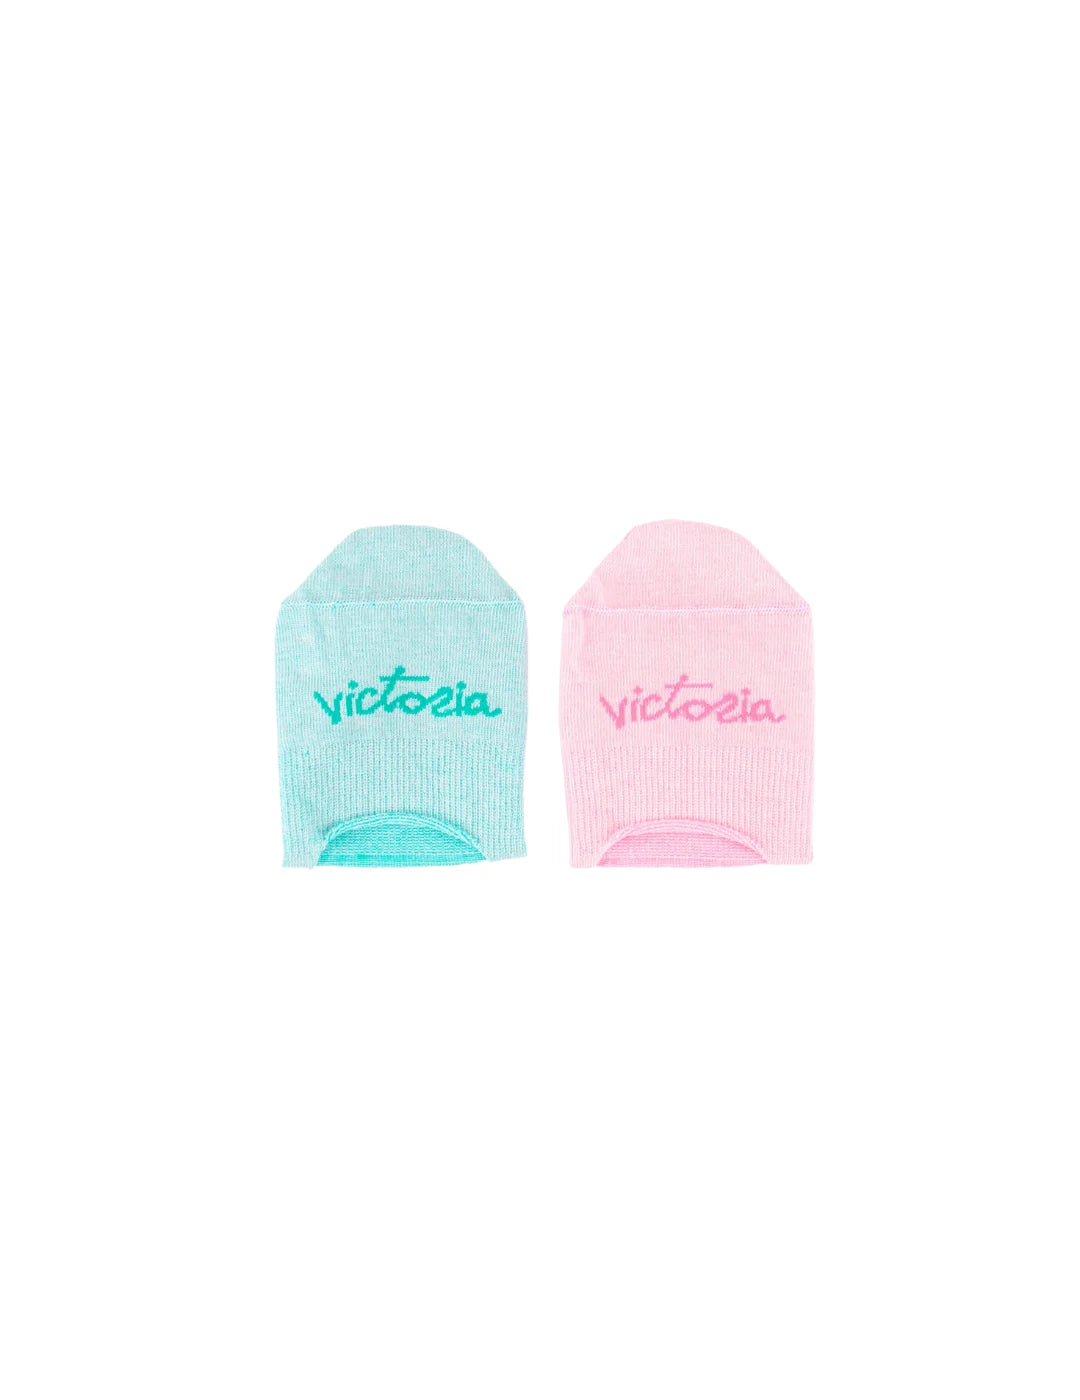 Calcetines Pinkies Fluor Victoria Rosa-Azul Pack 2 | Bicos de Fío